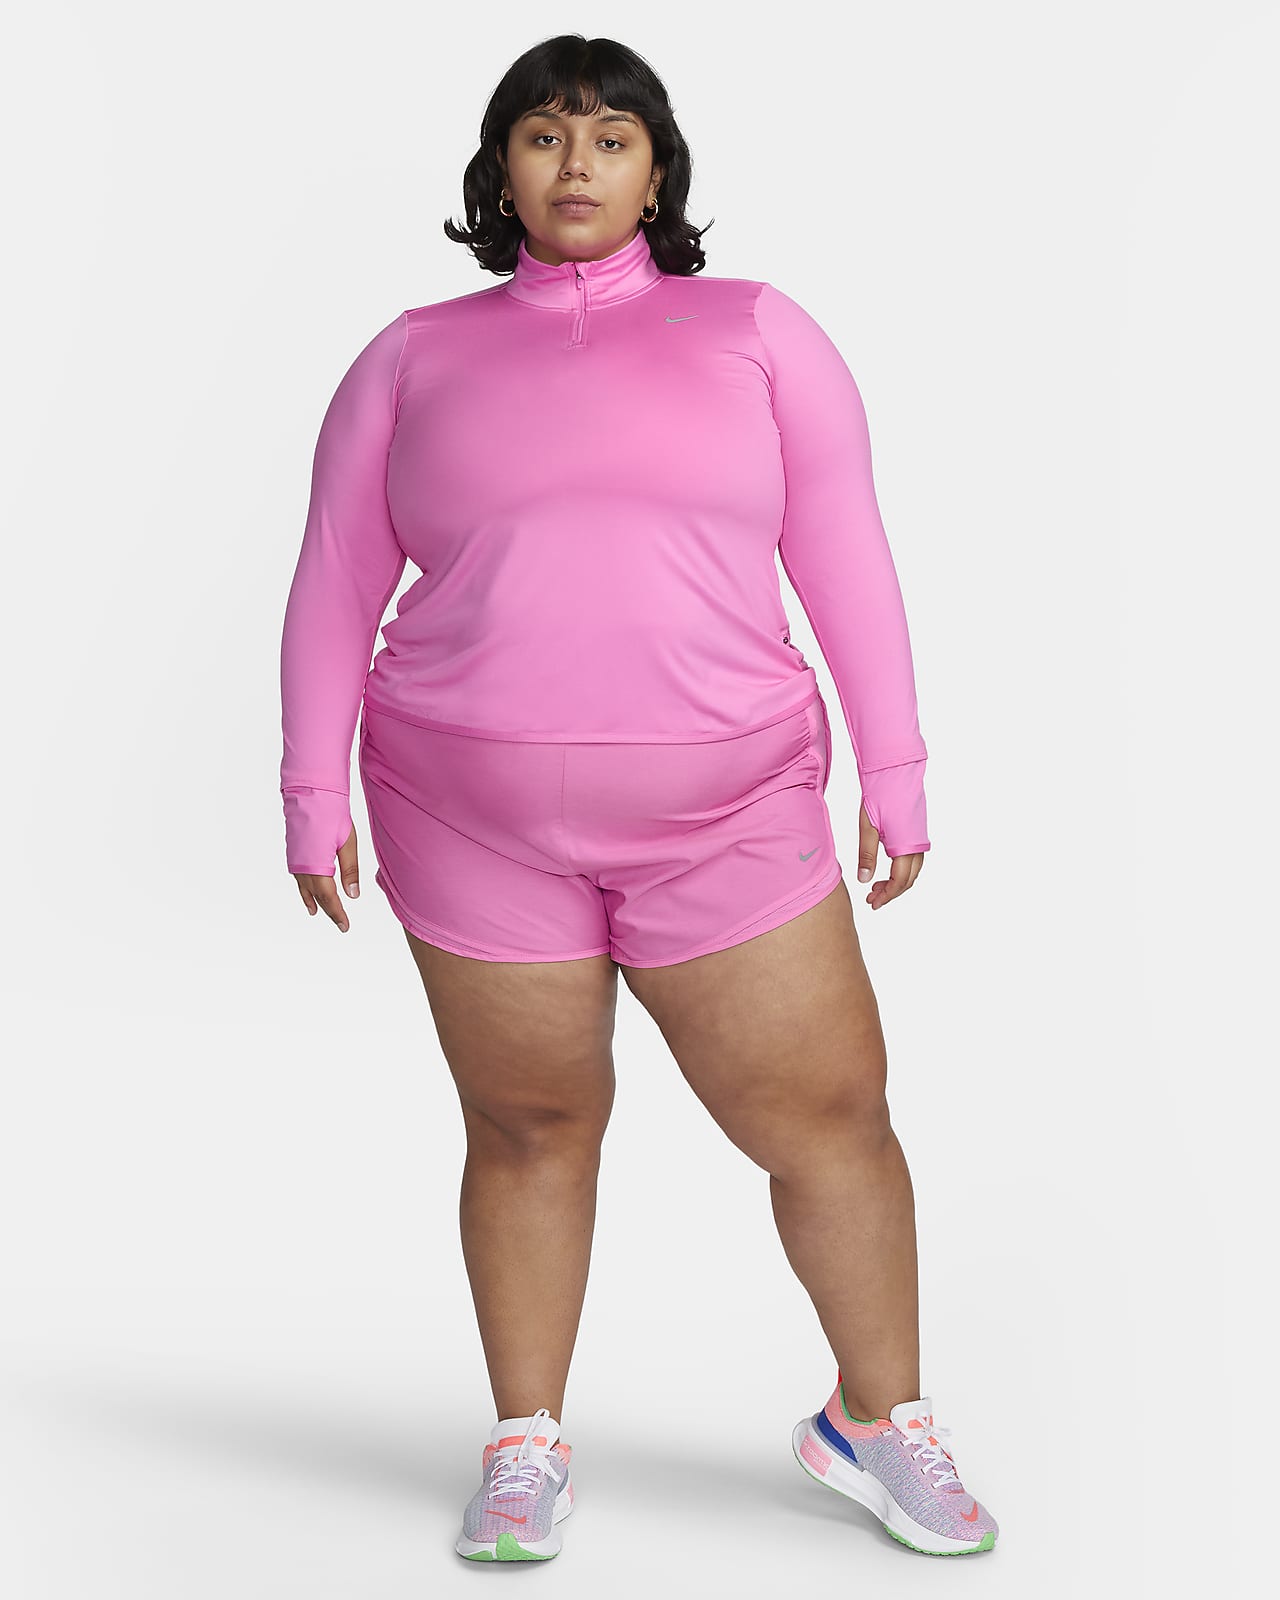 Women's jogging suit Nike Dri-FIT Essential - Nike - Shoes running